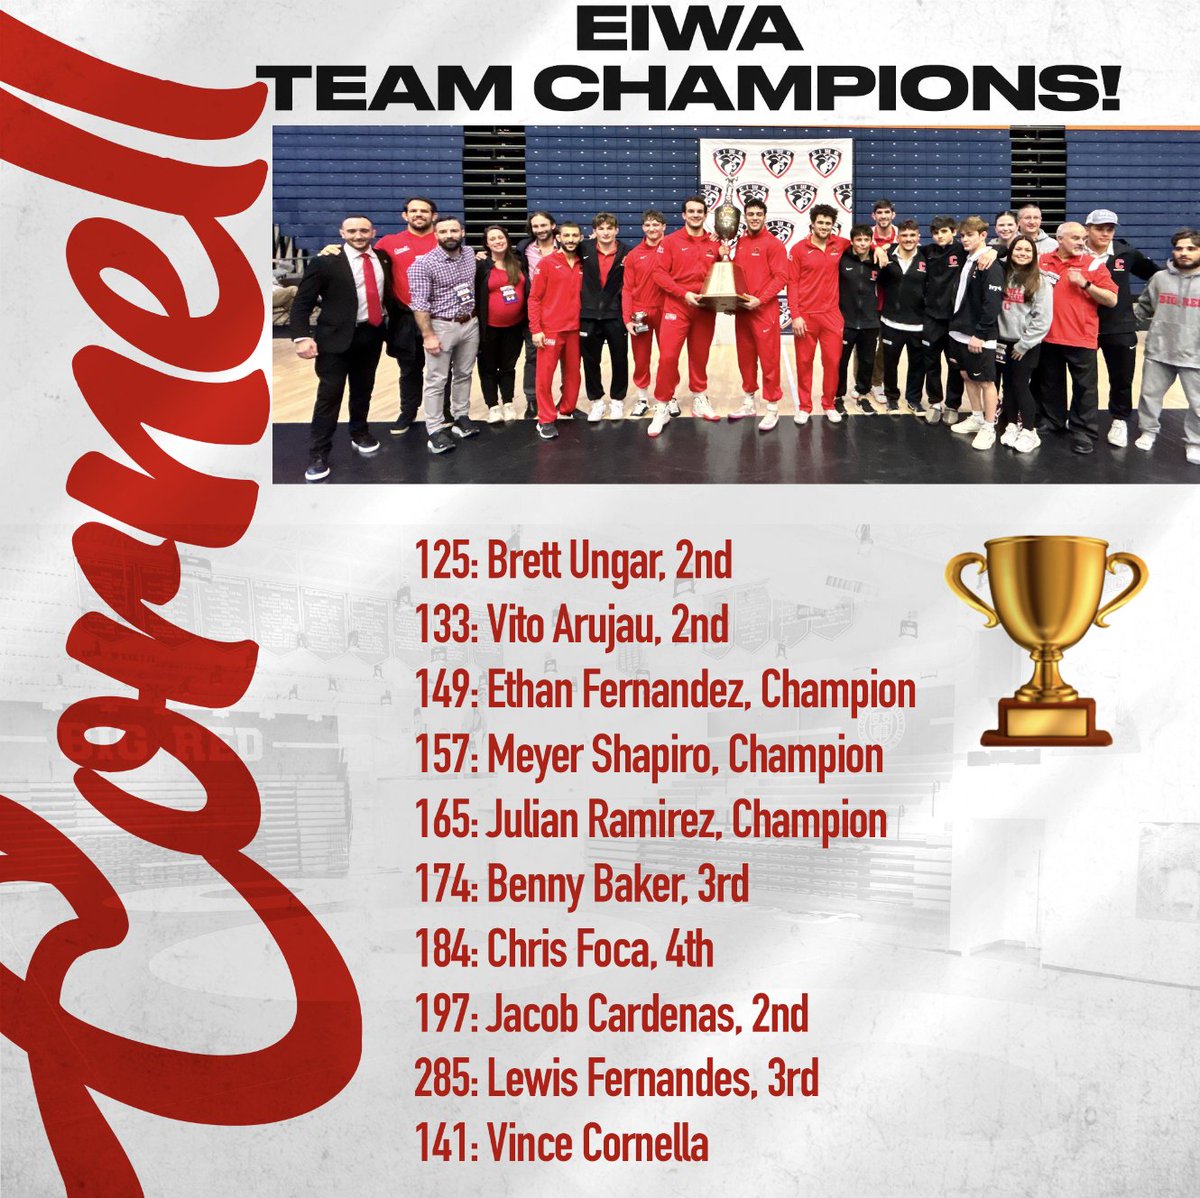 EIWA Team Champions! 🏆 #familynotfactory #yellcornell #GOBIGRED